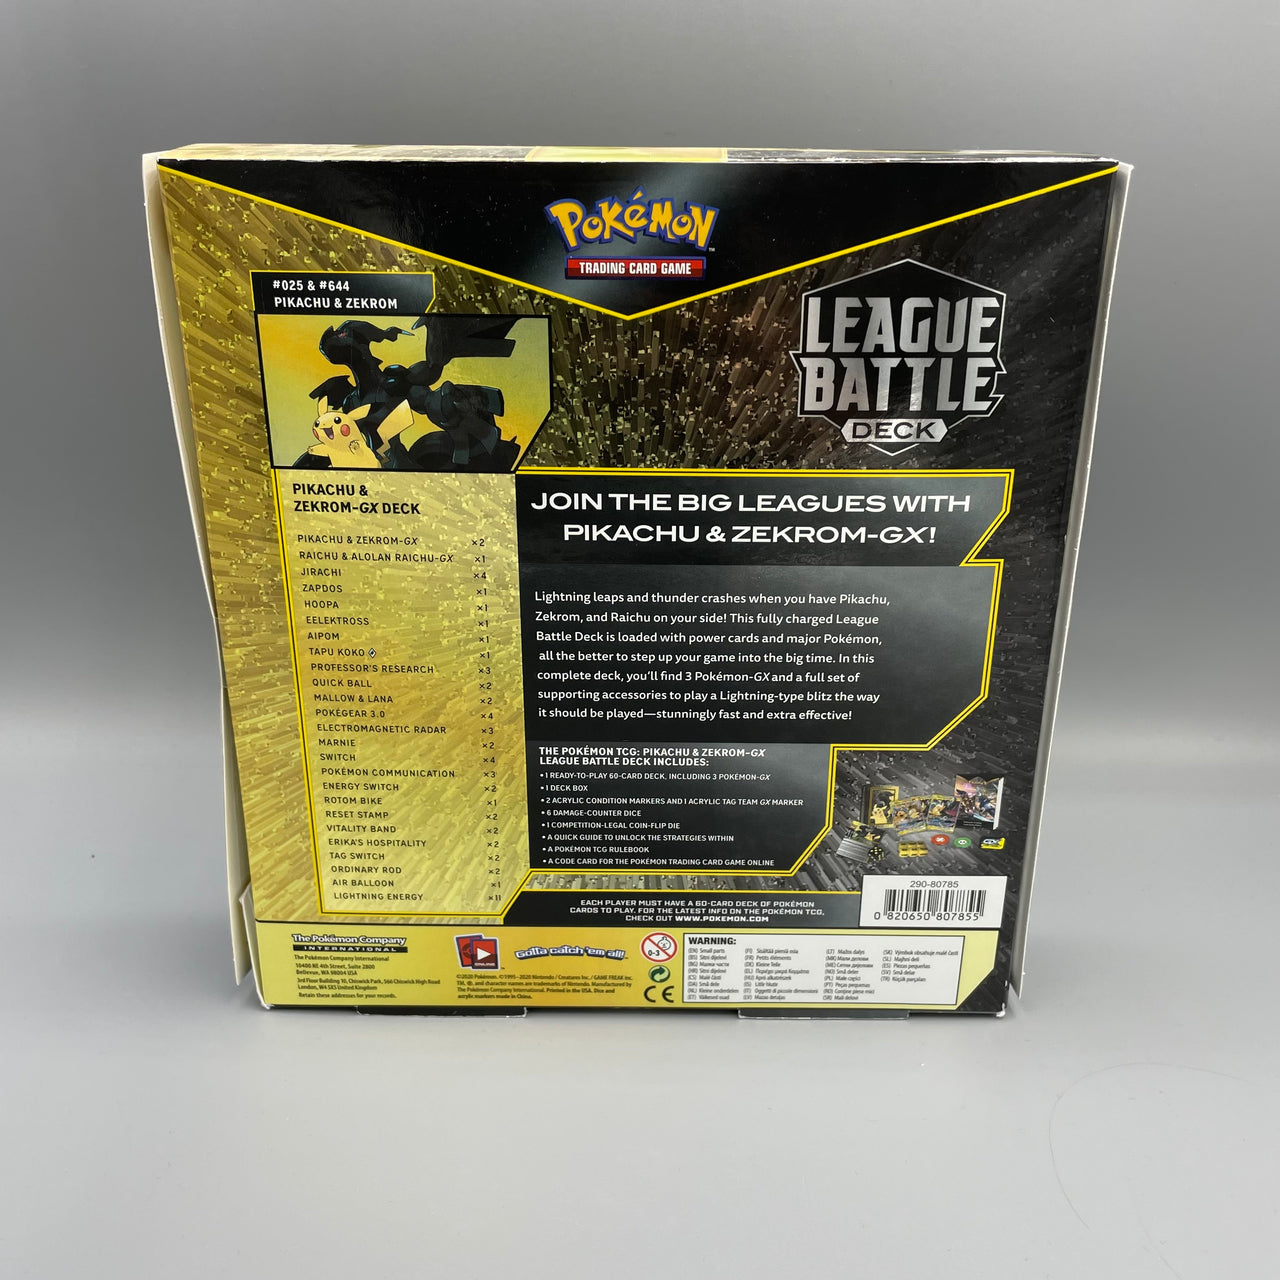 Pokémon Pikachu Zekrom GX Pokemon League Battle Deck Box - Englisch - Kleber gelöst